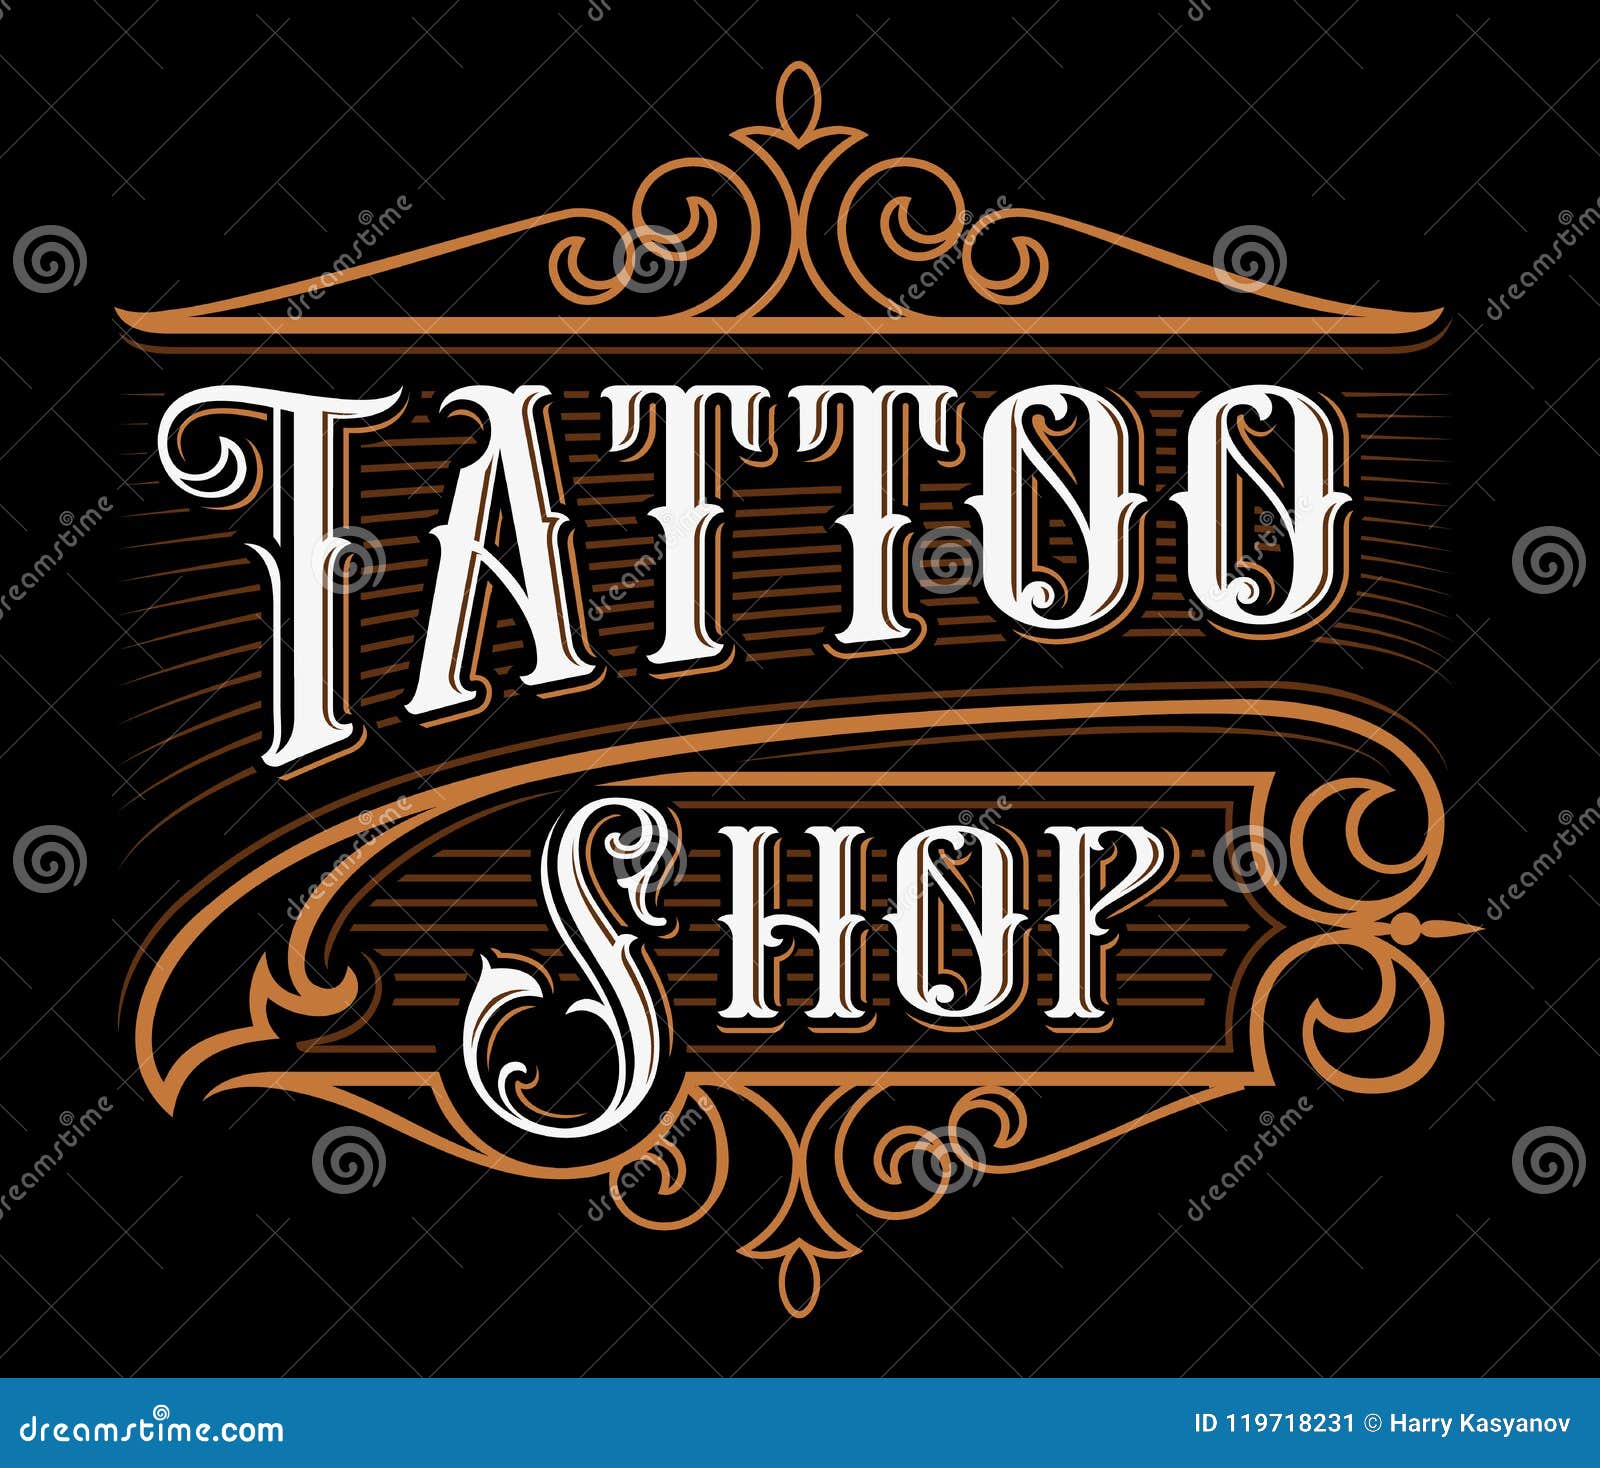 Tattoo Studio Website Templates | ThemeForest